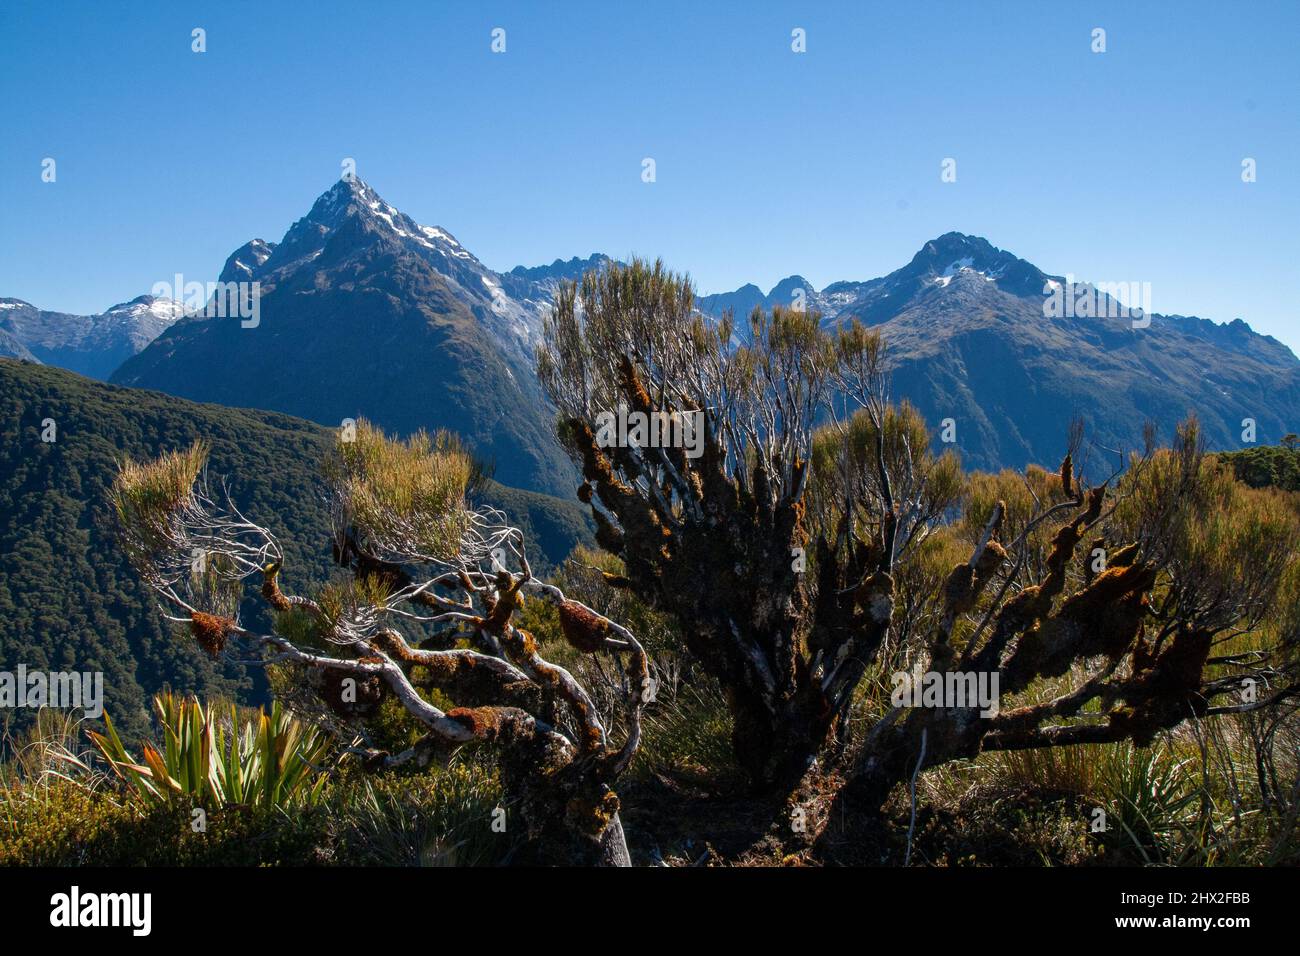 Dracophyllum longifolium, Inaka o Dragon Leaf albero di erba pianta alpina nativo della Nuova Zelanda, Monti Darran in backround, Key Summit Foto Stock